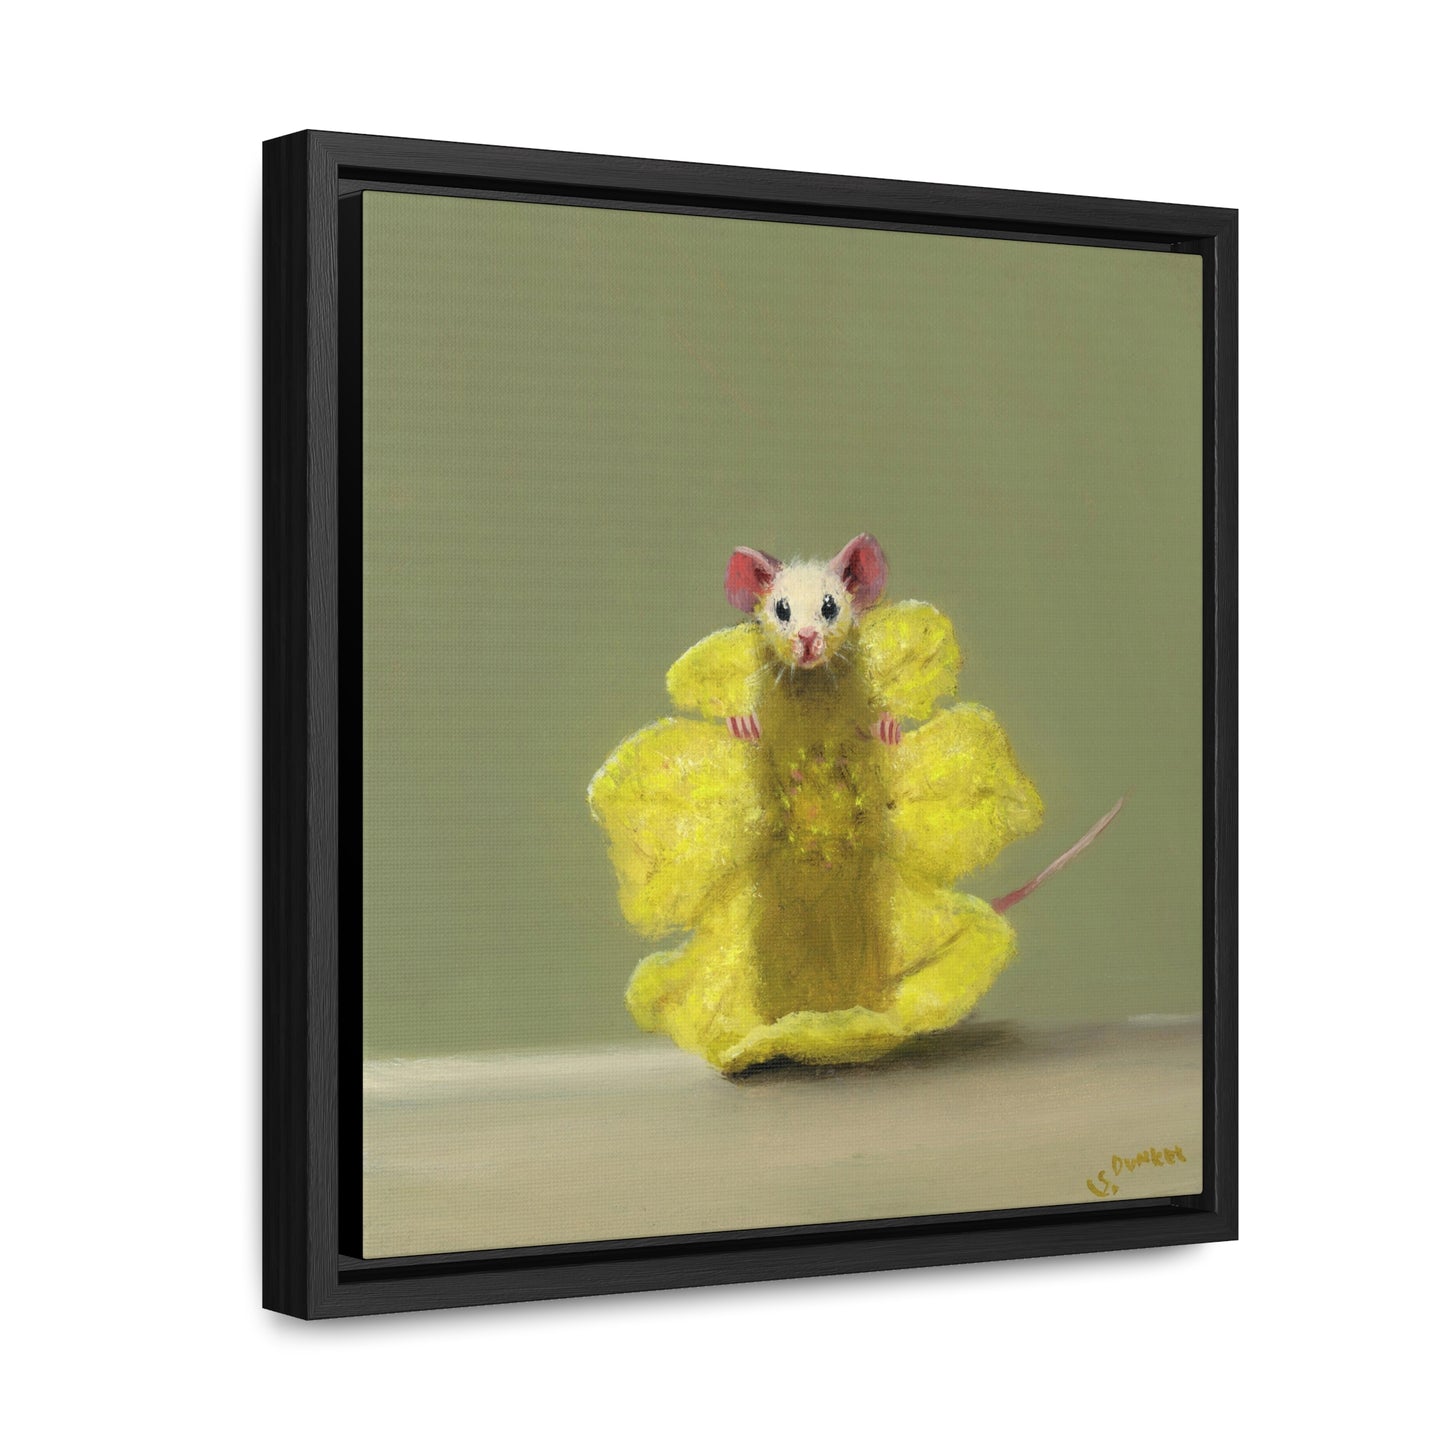 Stuart Dunkel: "Camouflage in Lemon" - Framed Canvas Reproduction